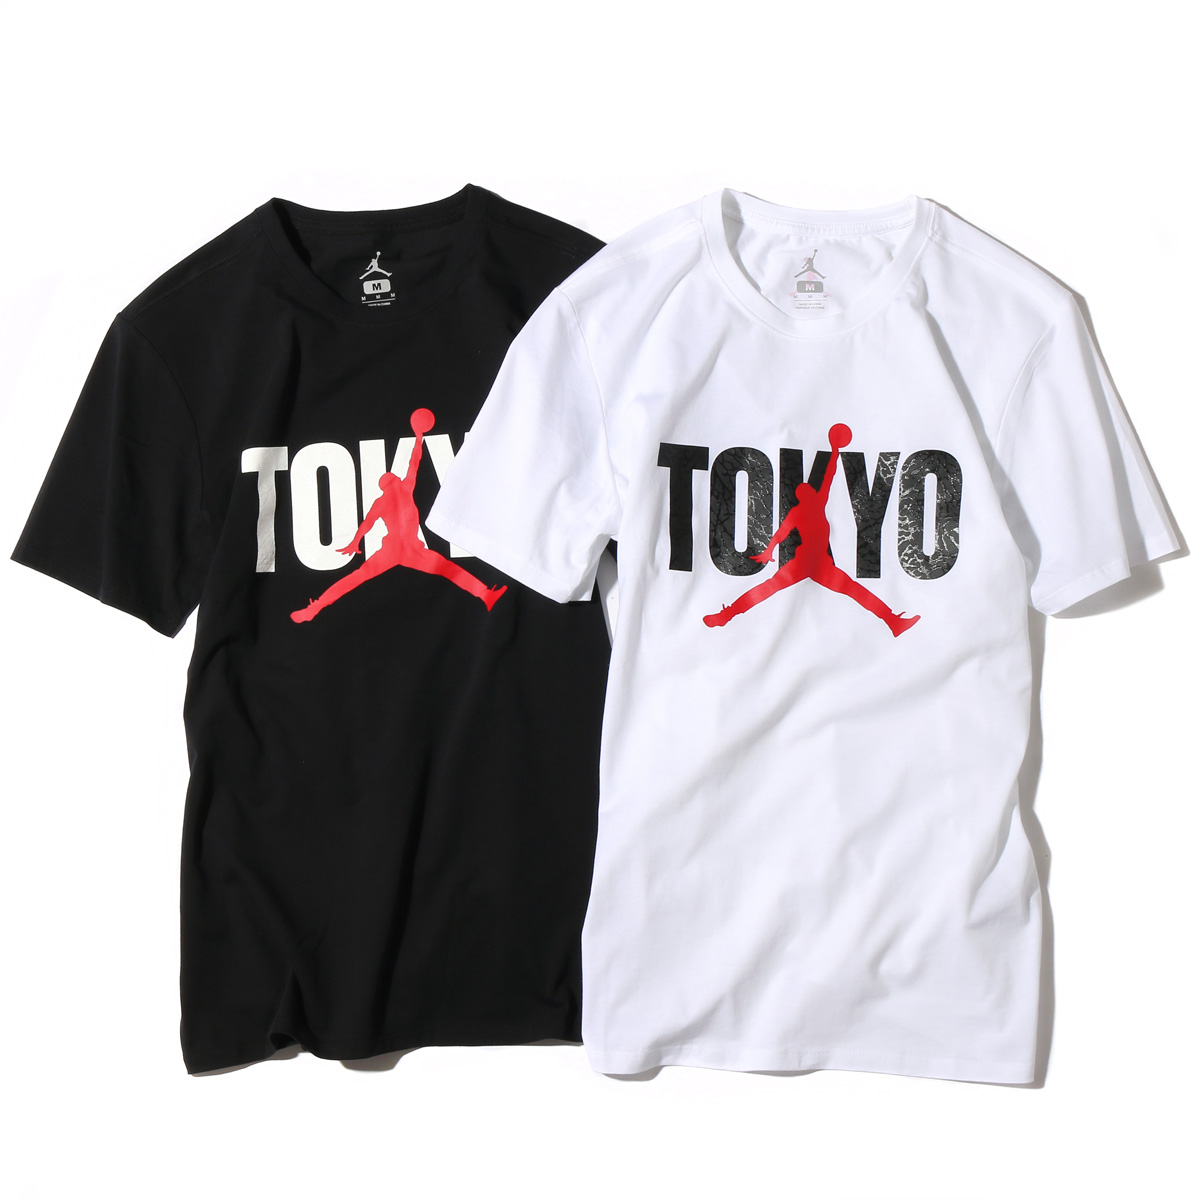 Jordan Brand Shouts Tokyo On This New 